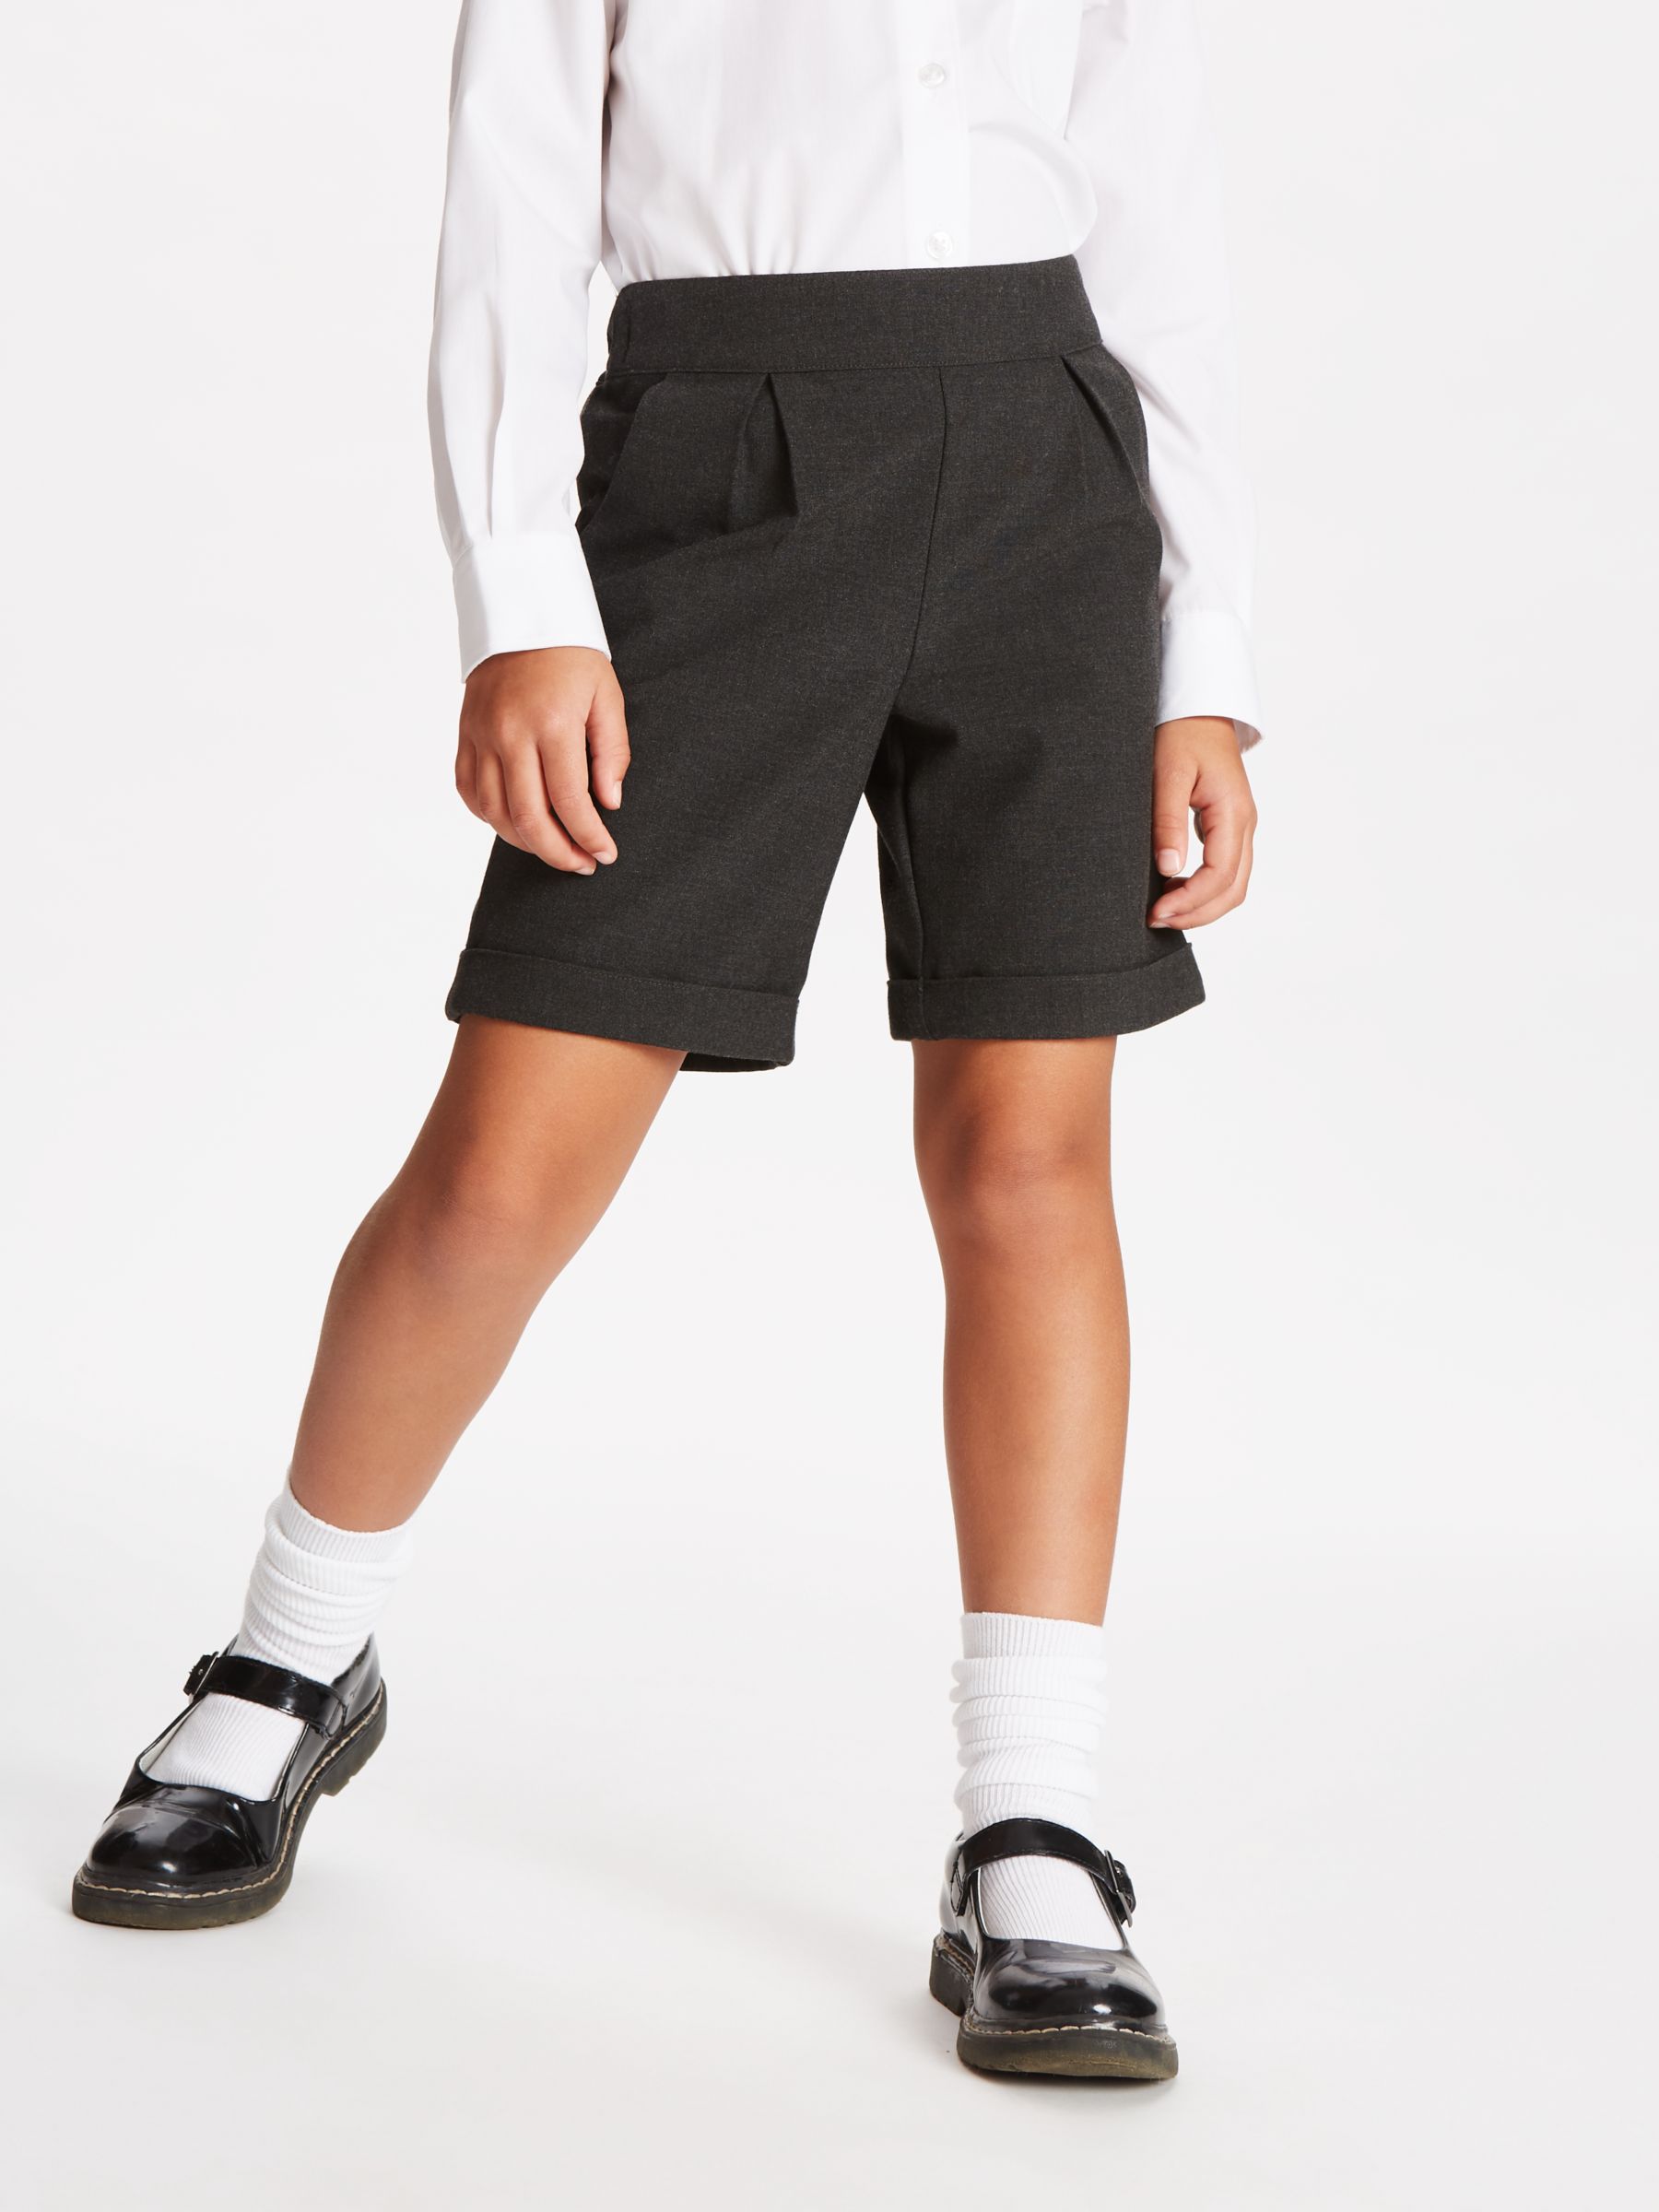 John Lewis Girls' Adjustable City School Shorts, Grey, 8 years